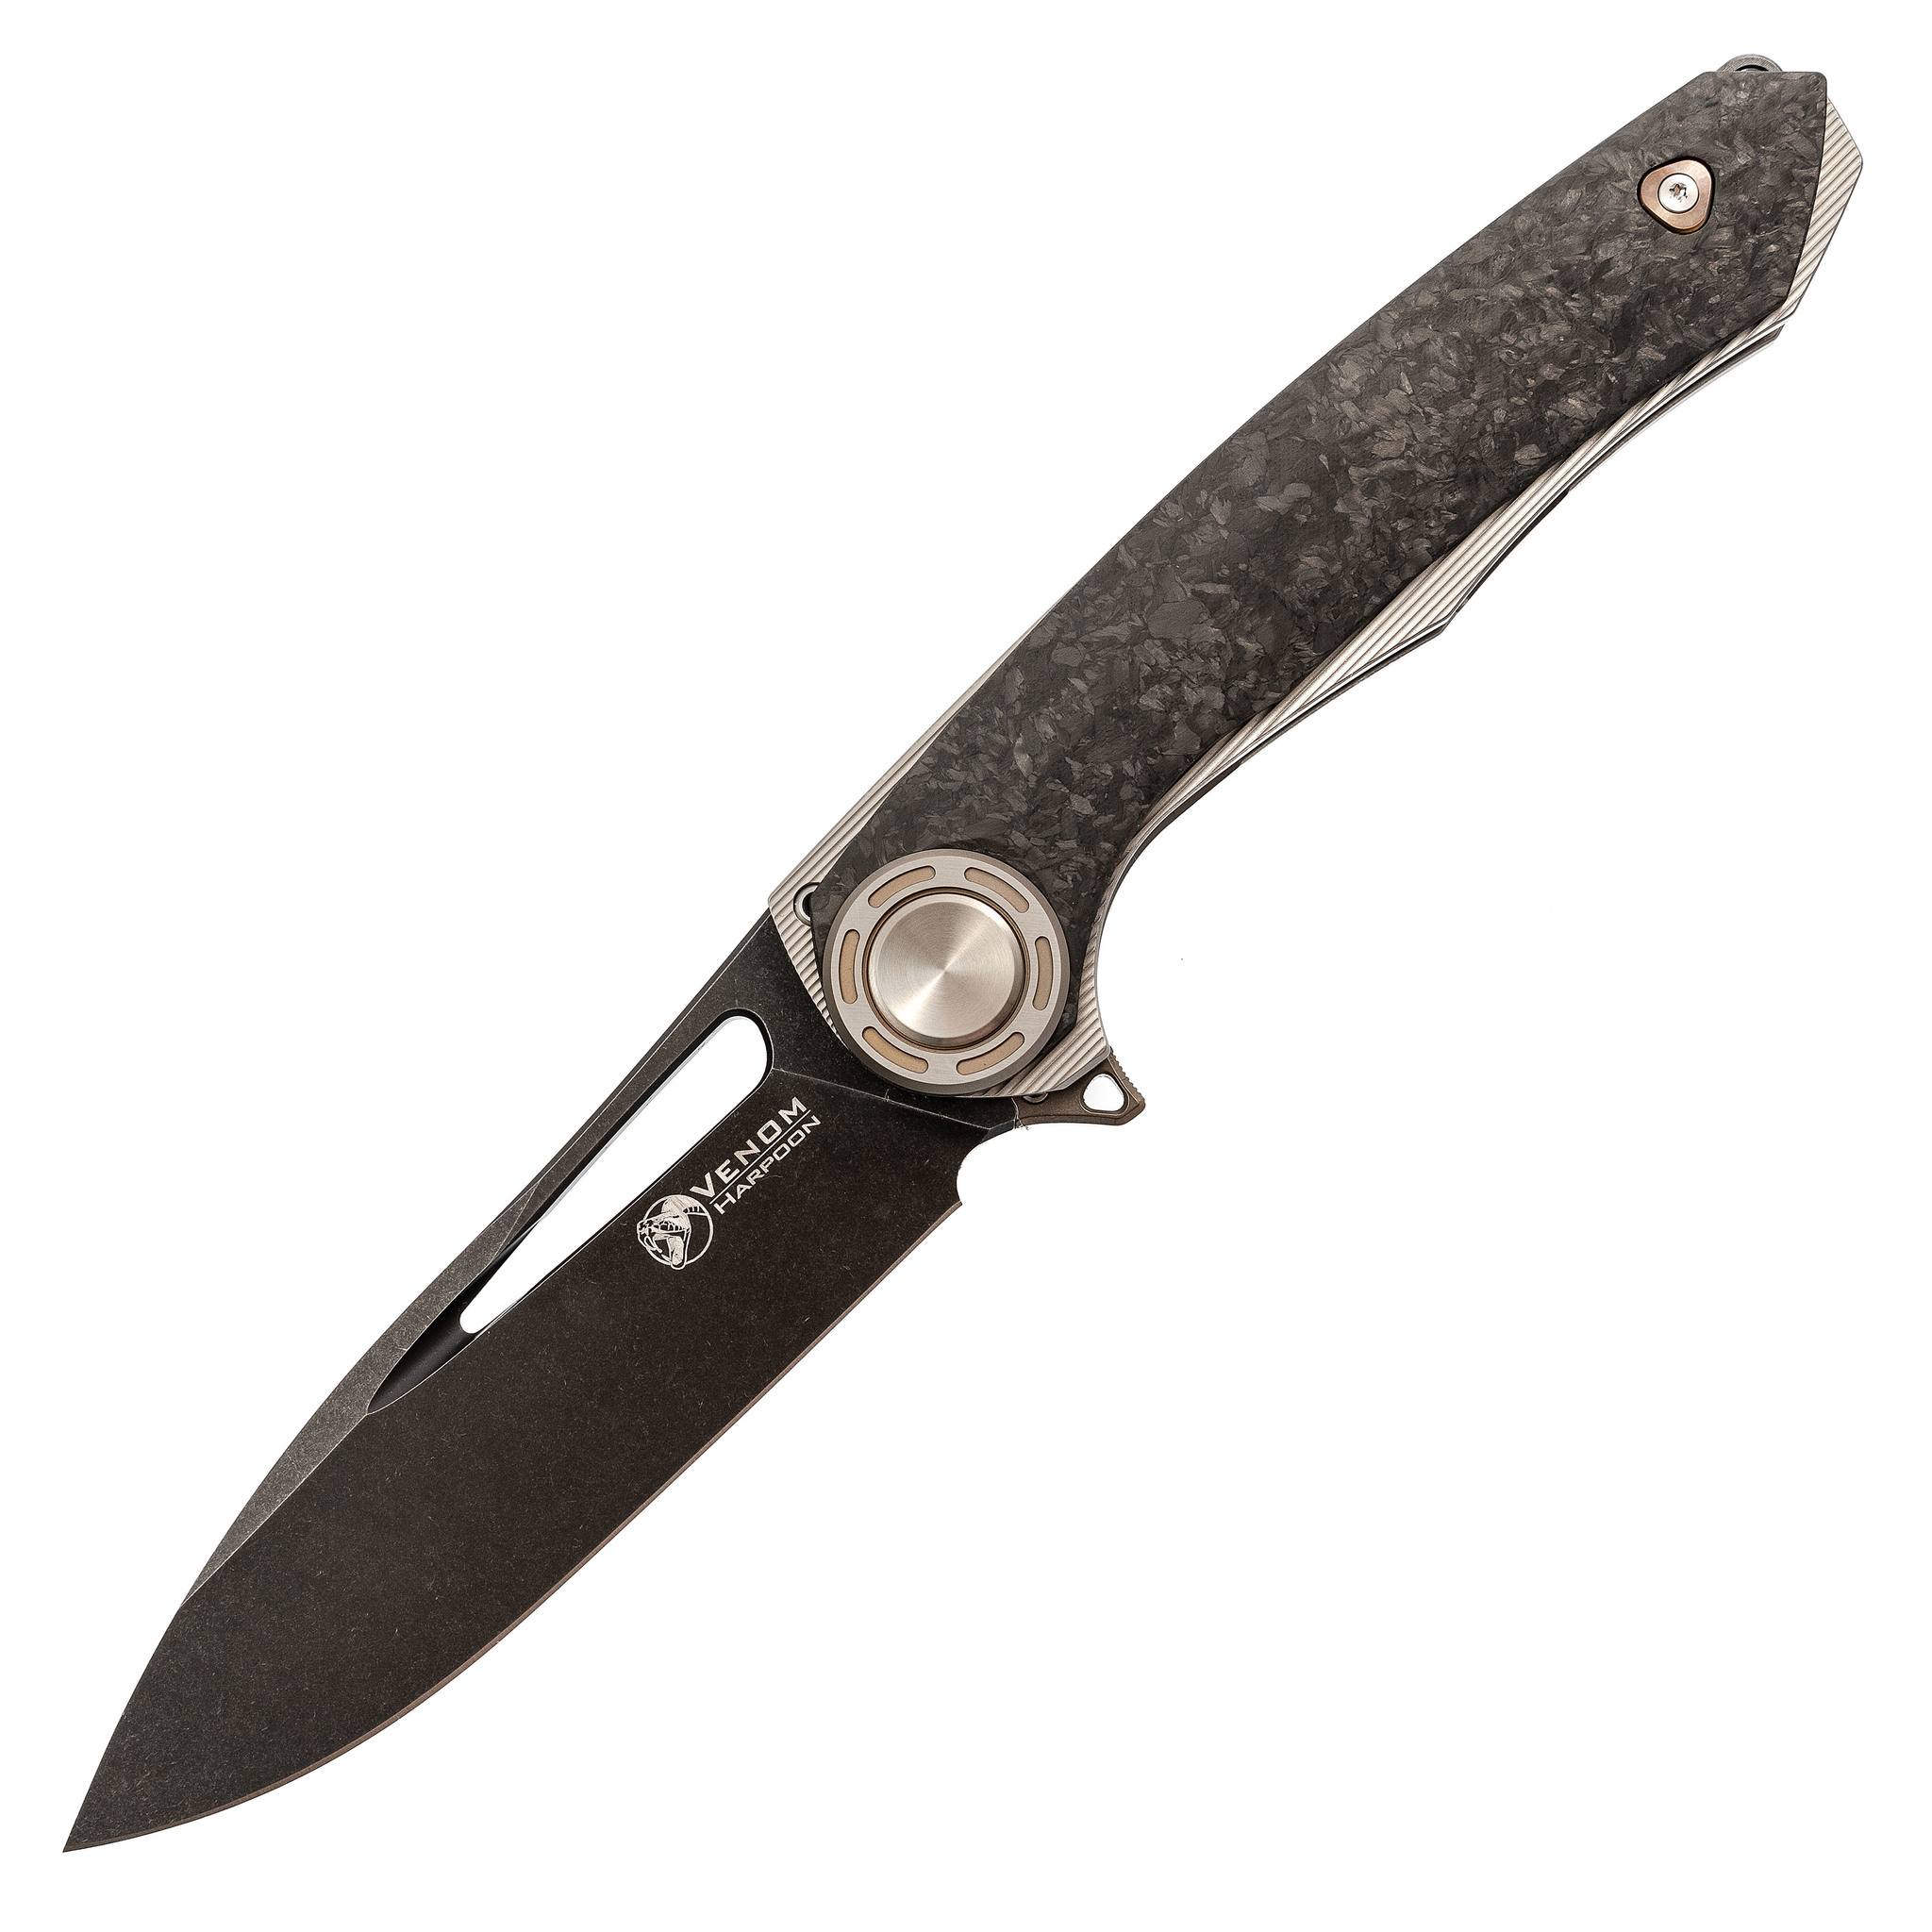 Складной нож Harpoon Black (Гарпун) от Kevin John, сталь M390